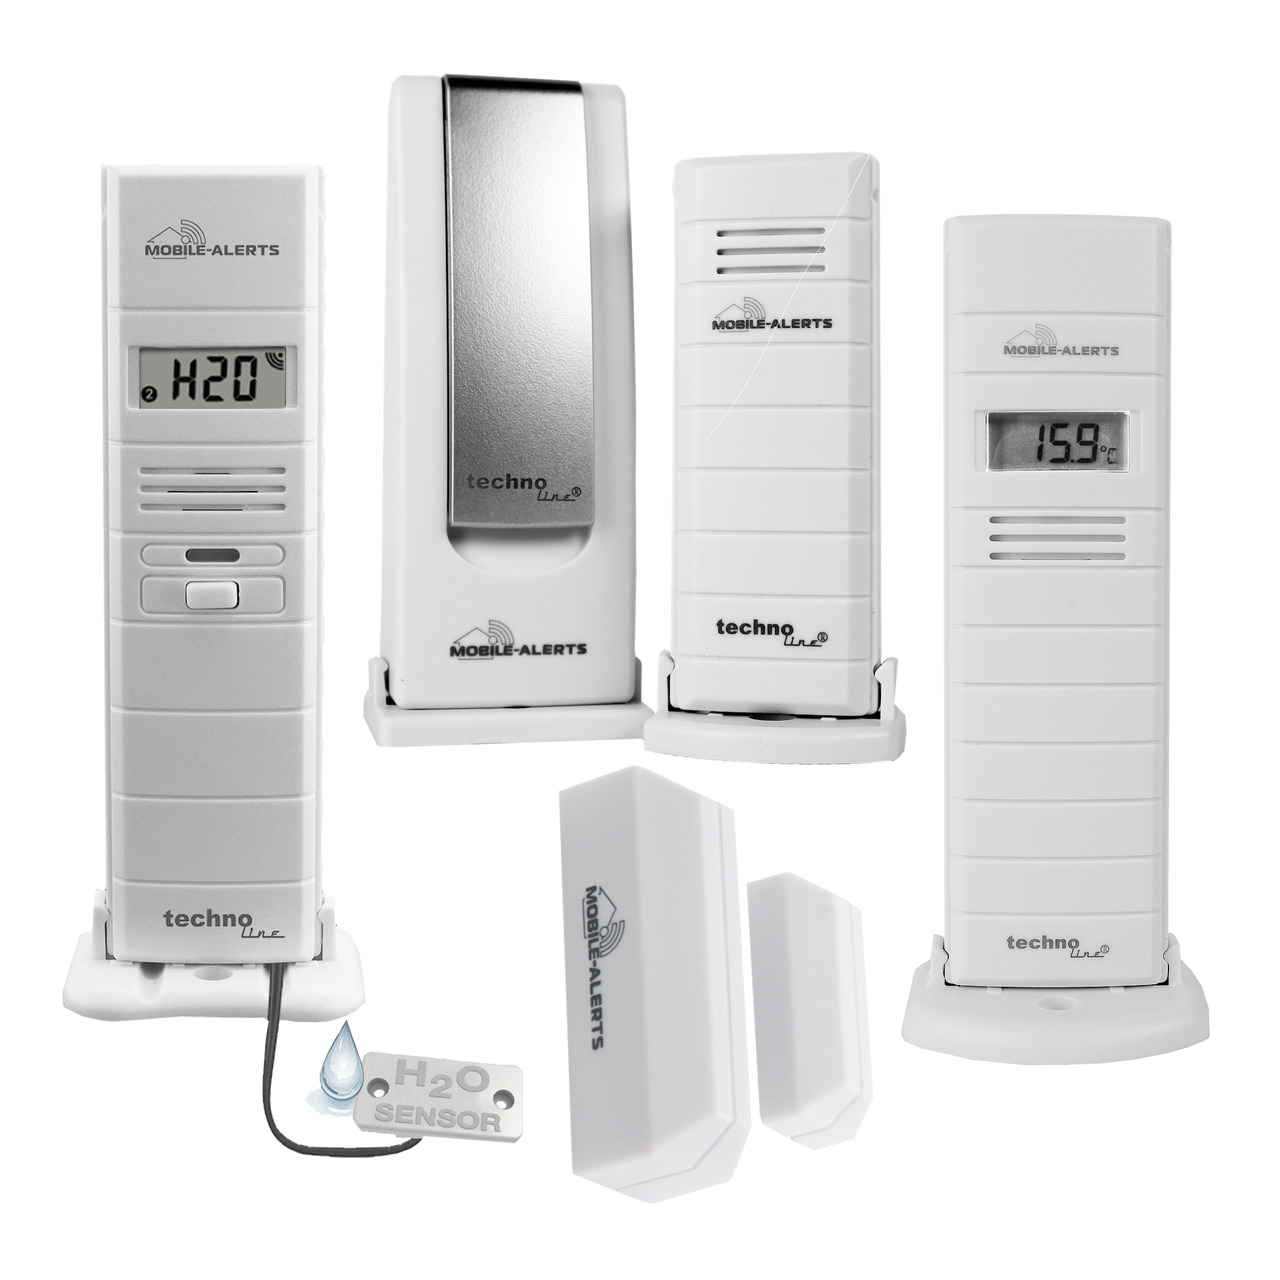 Mobile Alerts Wetter-Set (Gateway- Temperatursensor- 2x Thermo-Hygrosensor- Fensterkontakt) unter Klima - Wetter - Umwelt